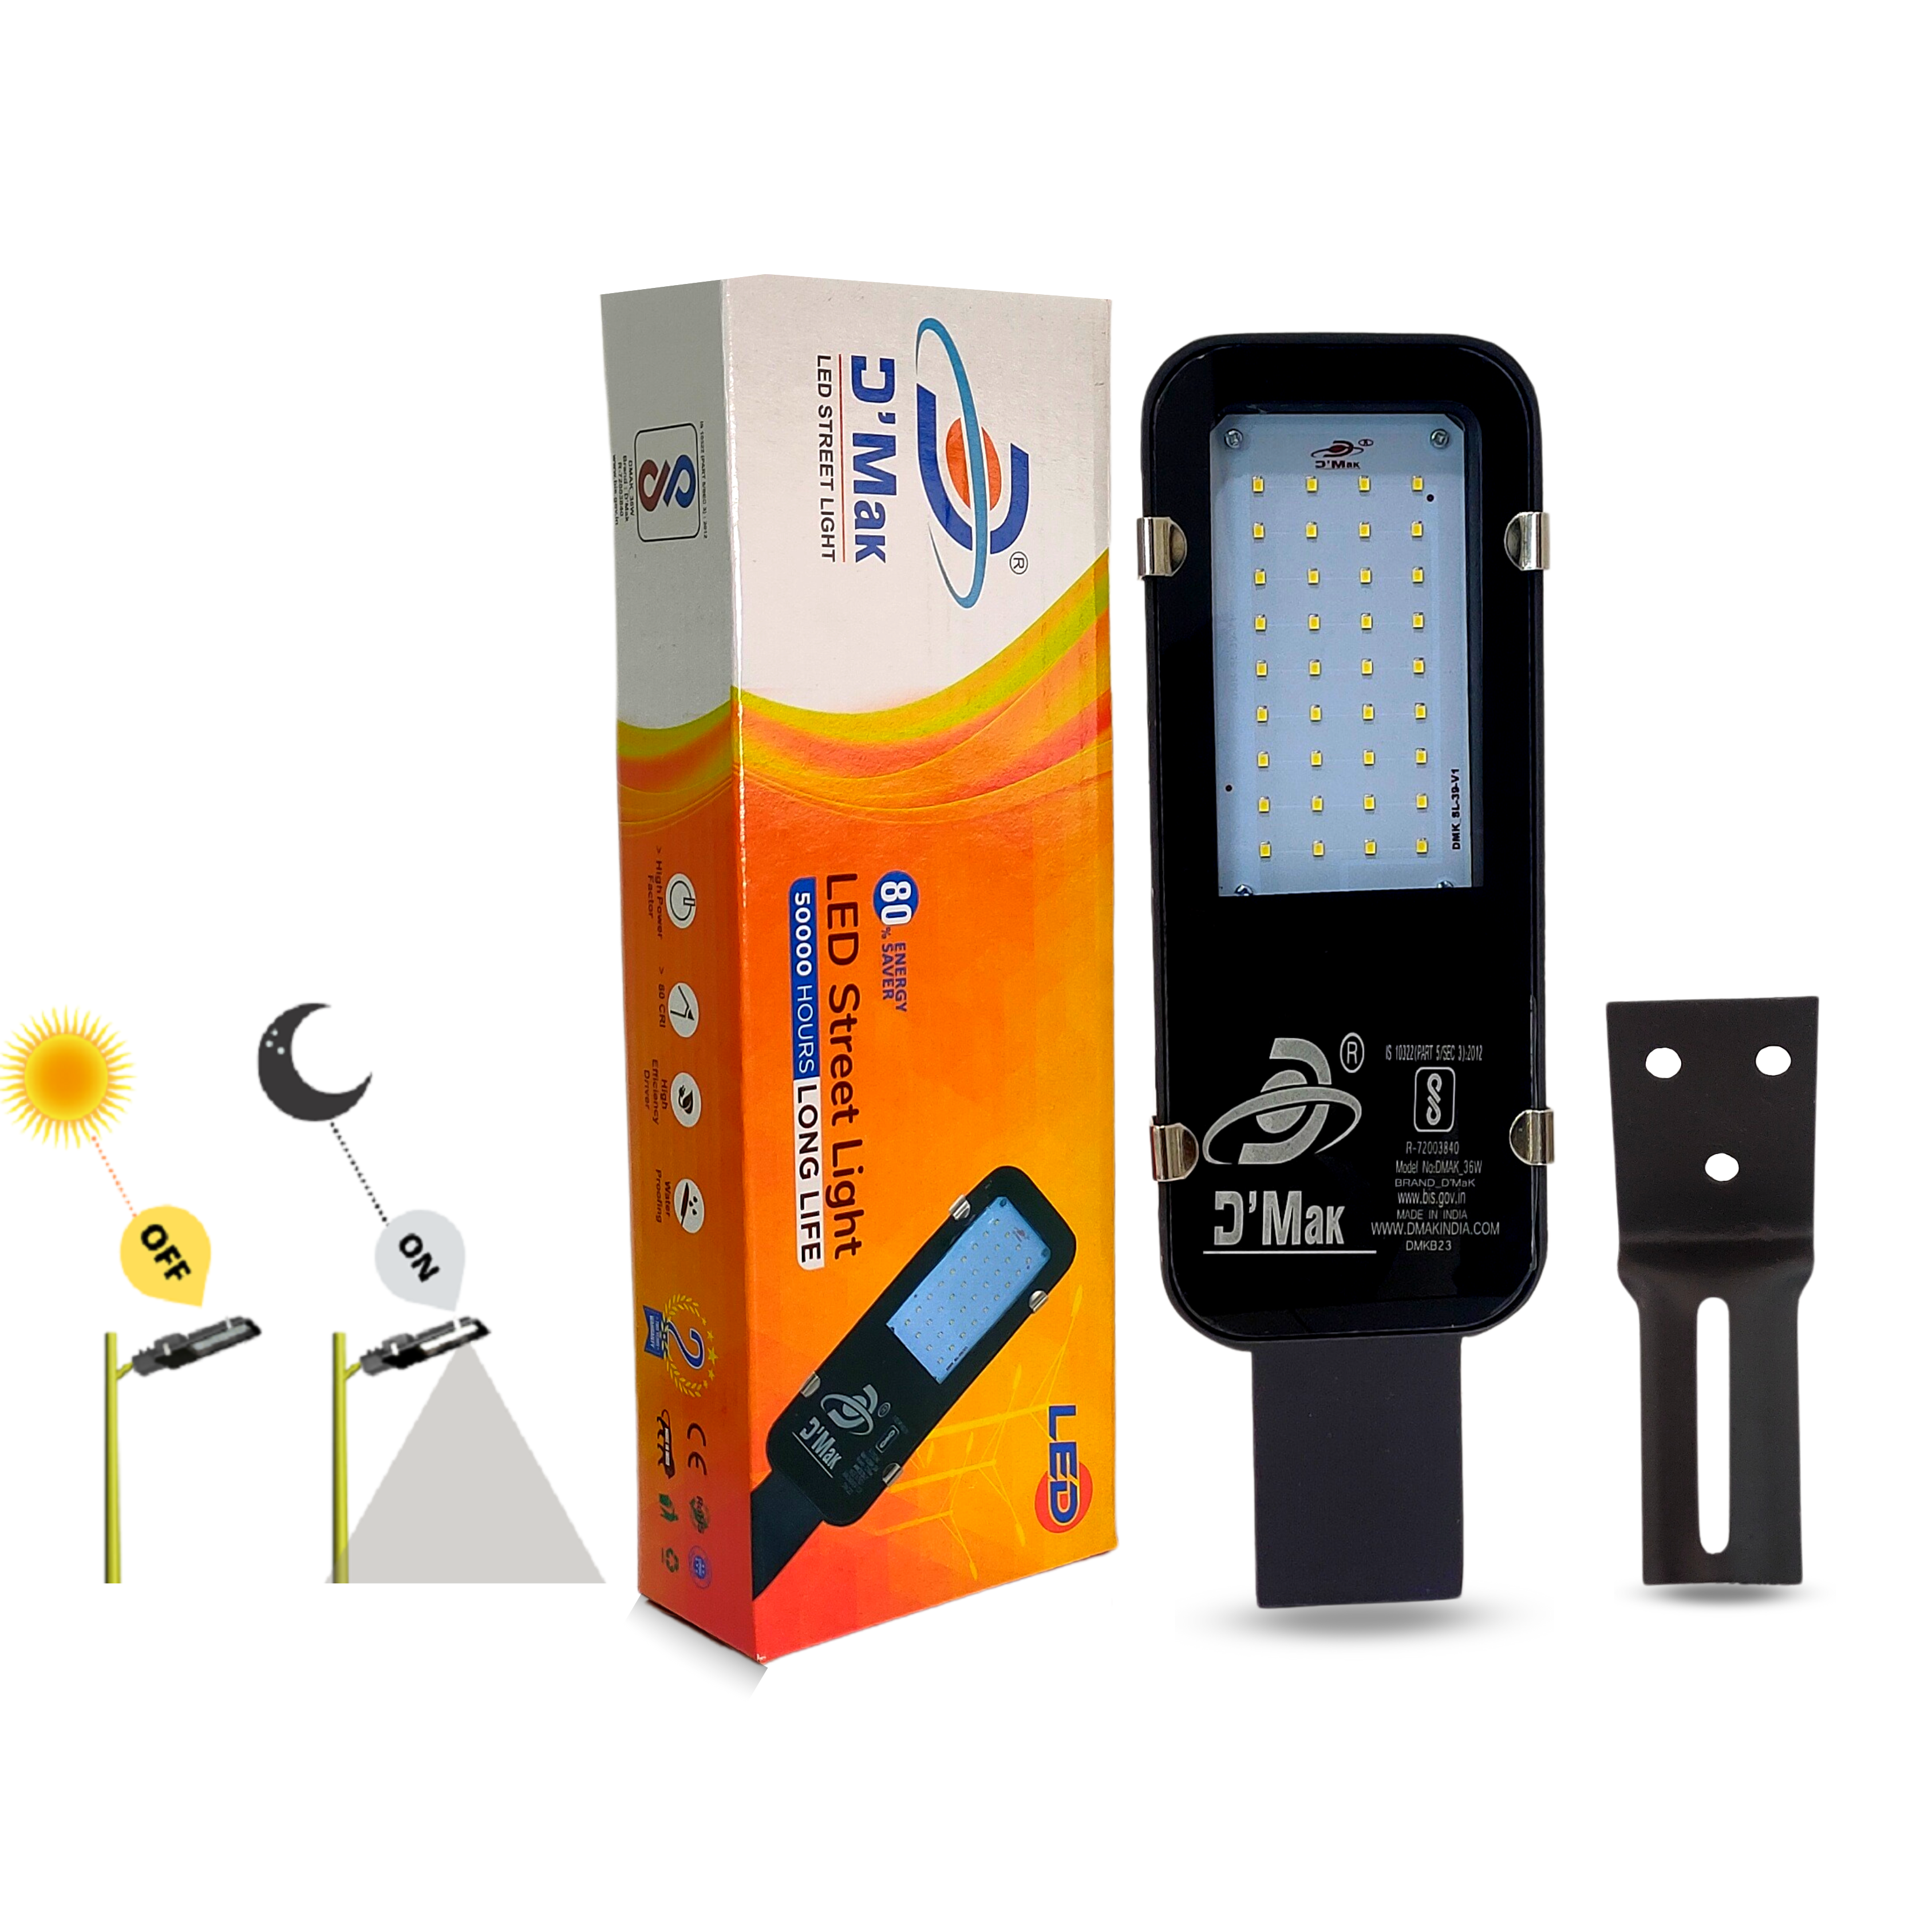 30 Watt Automatic Sensor System LED Street Light Waterproof IP65 for Outdoor Purposes